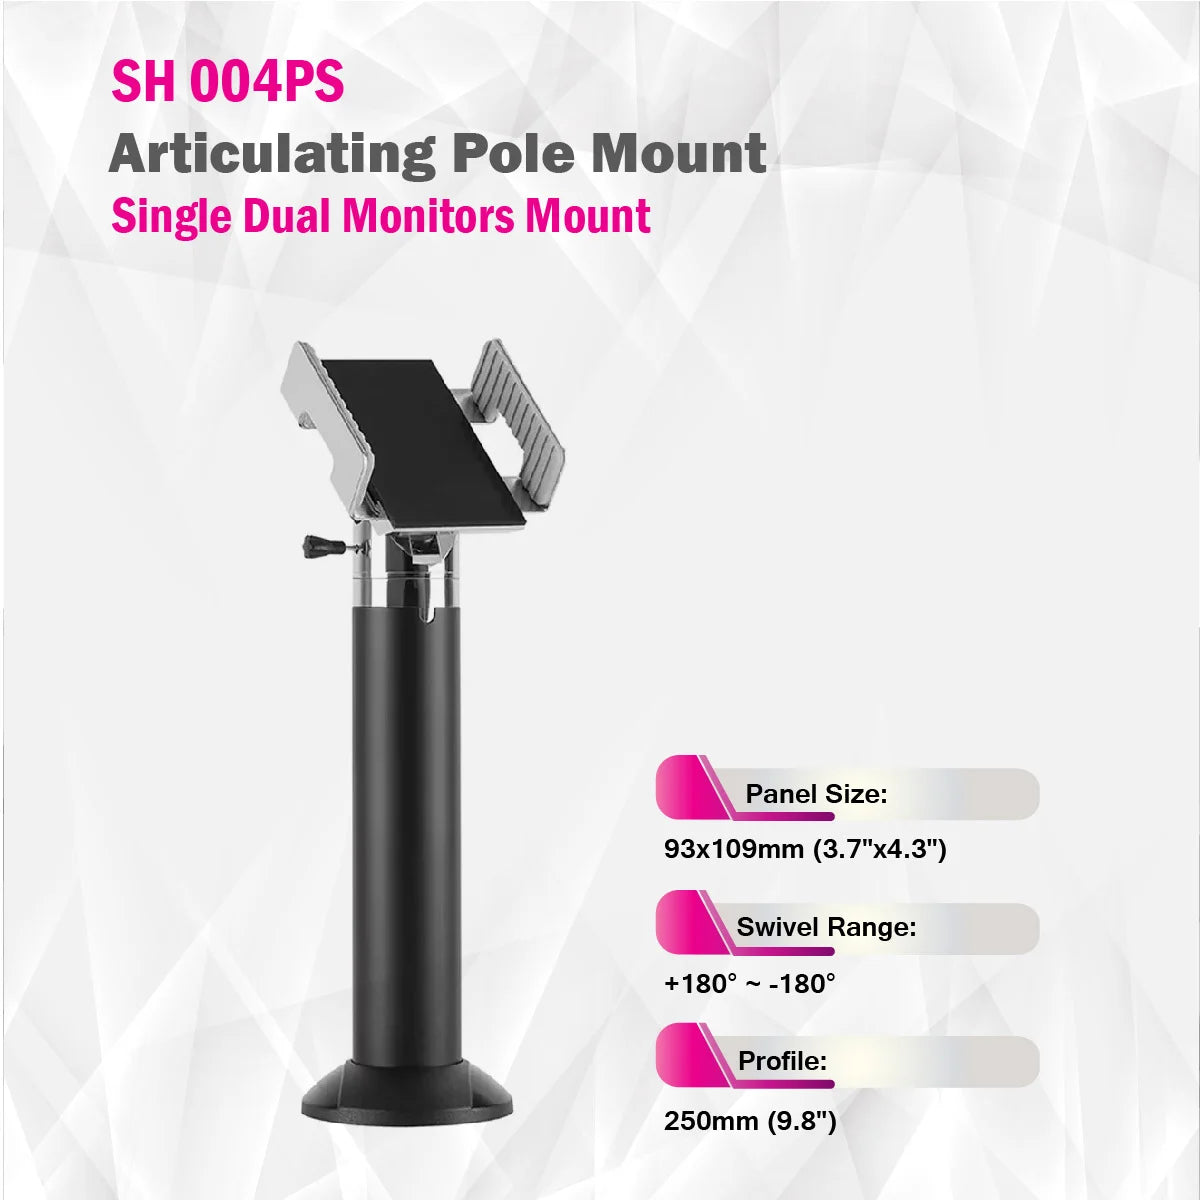 Skilltech - SH 004PS - Articulating Pole Mount Single Dual Monitors Mount